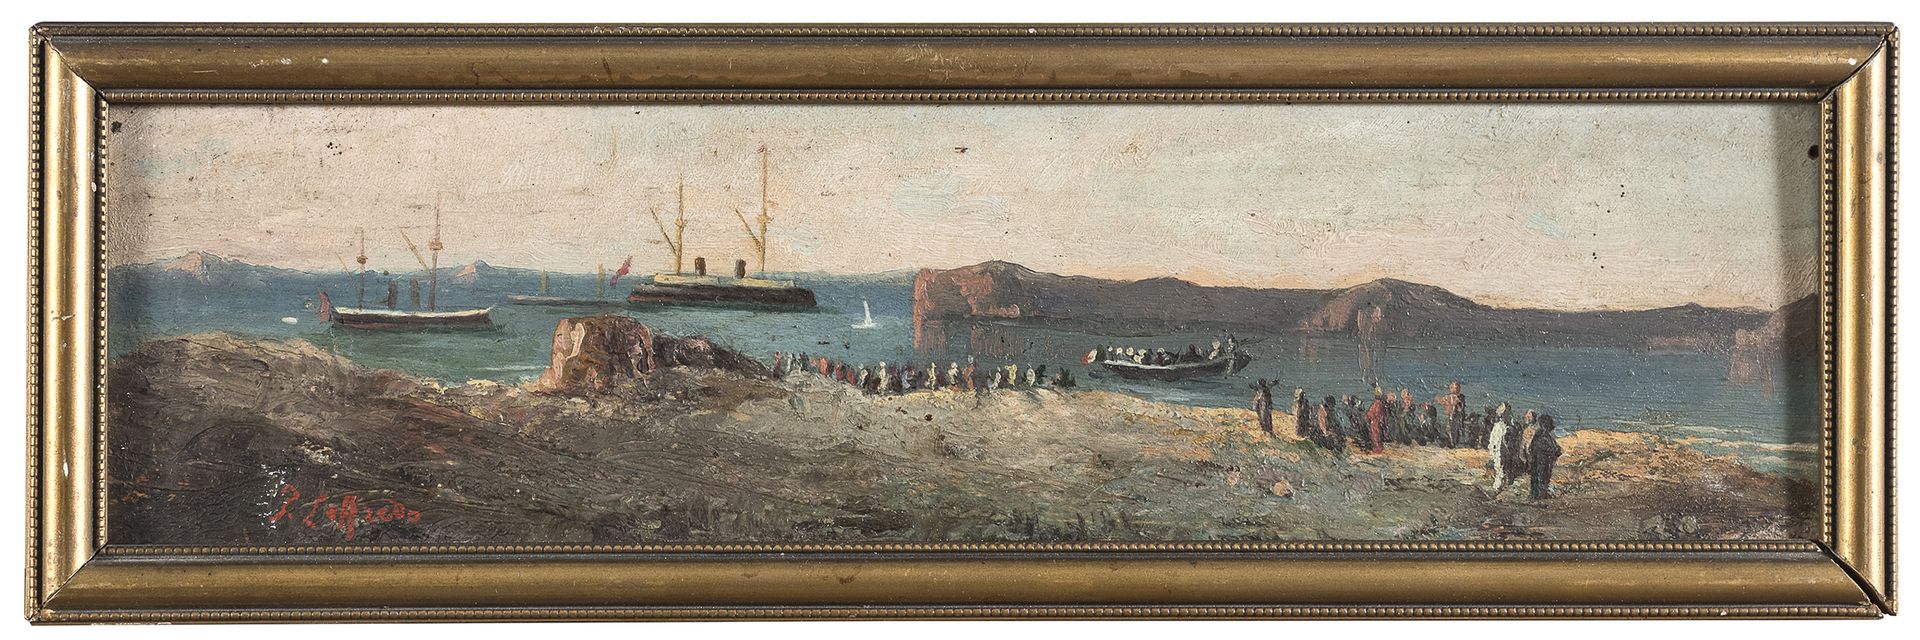 Null P. LOFFREDO


(19. Jahrhundert)





Blick auf die Insel Kreta bei Chania m&hellip;